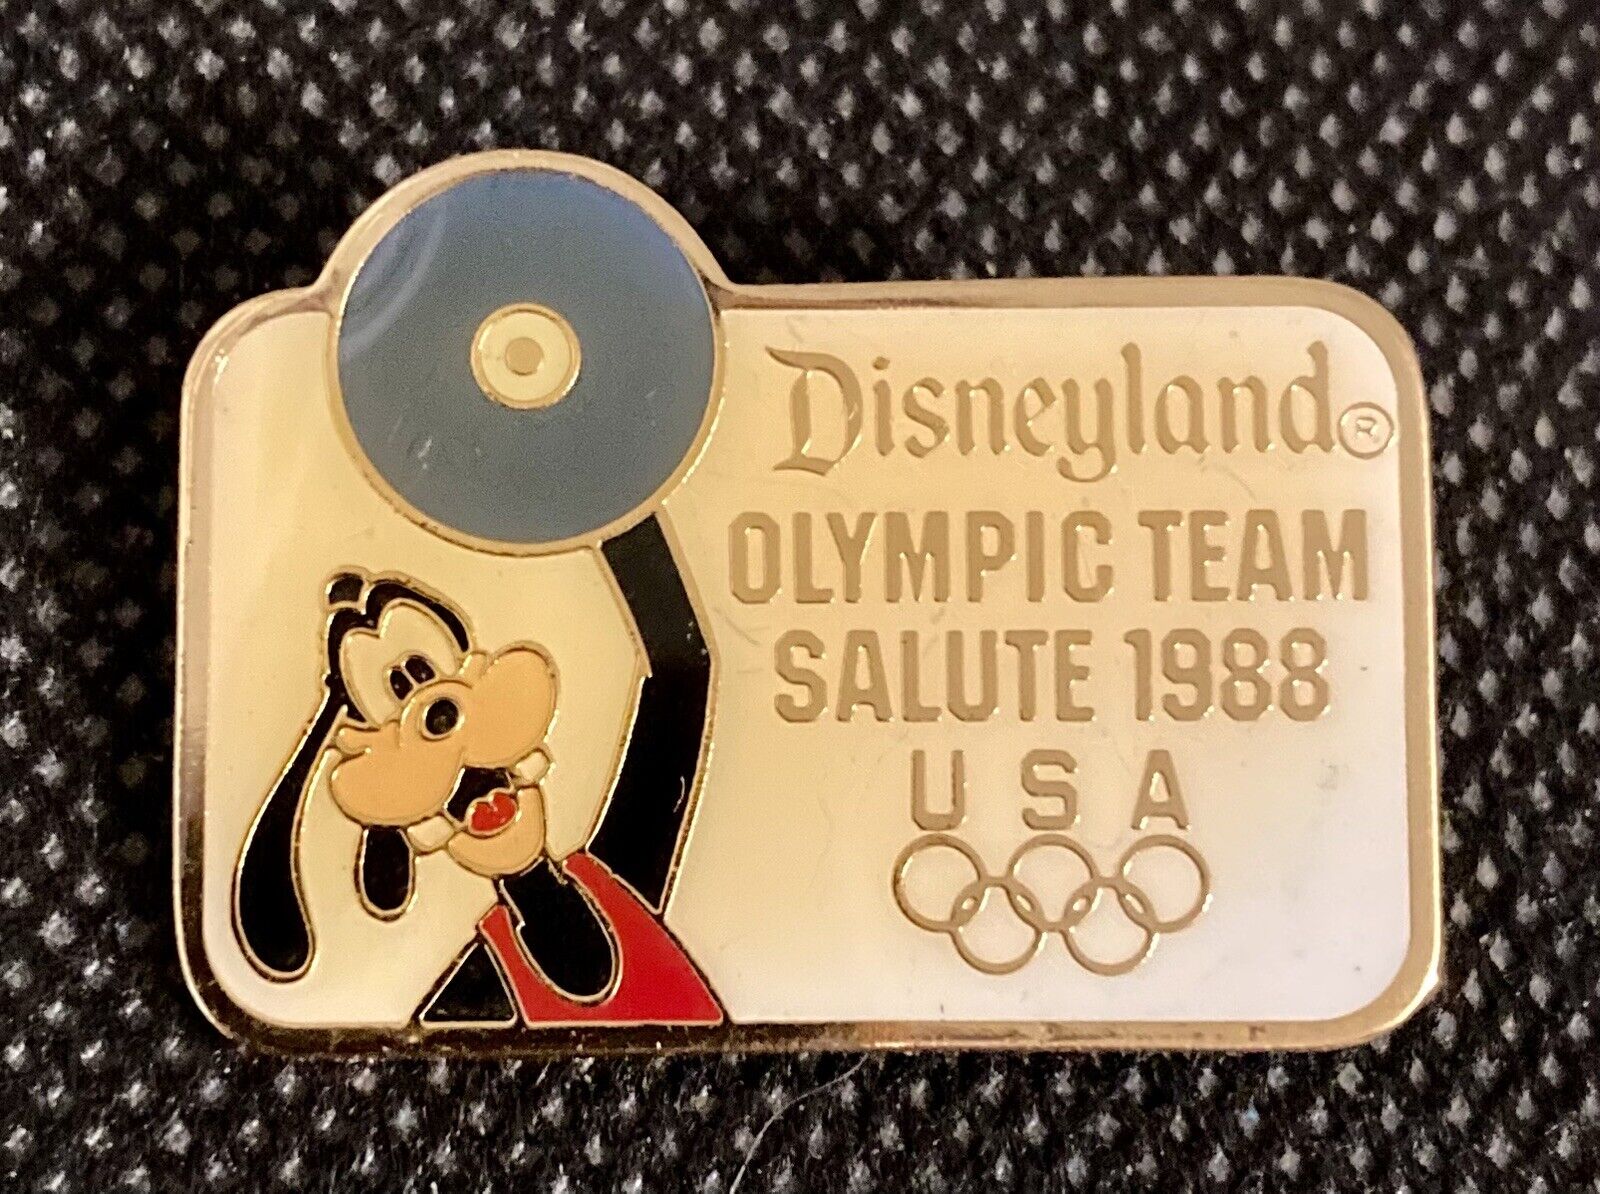 Disneyland USA Olympic Team Pin 1988 Goofy